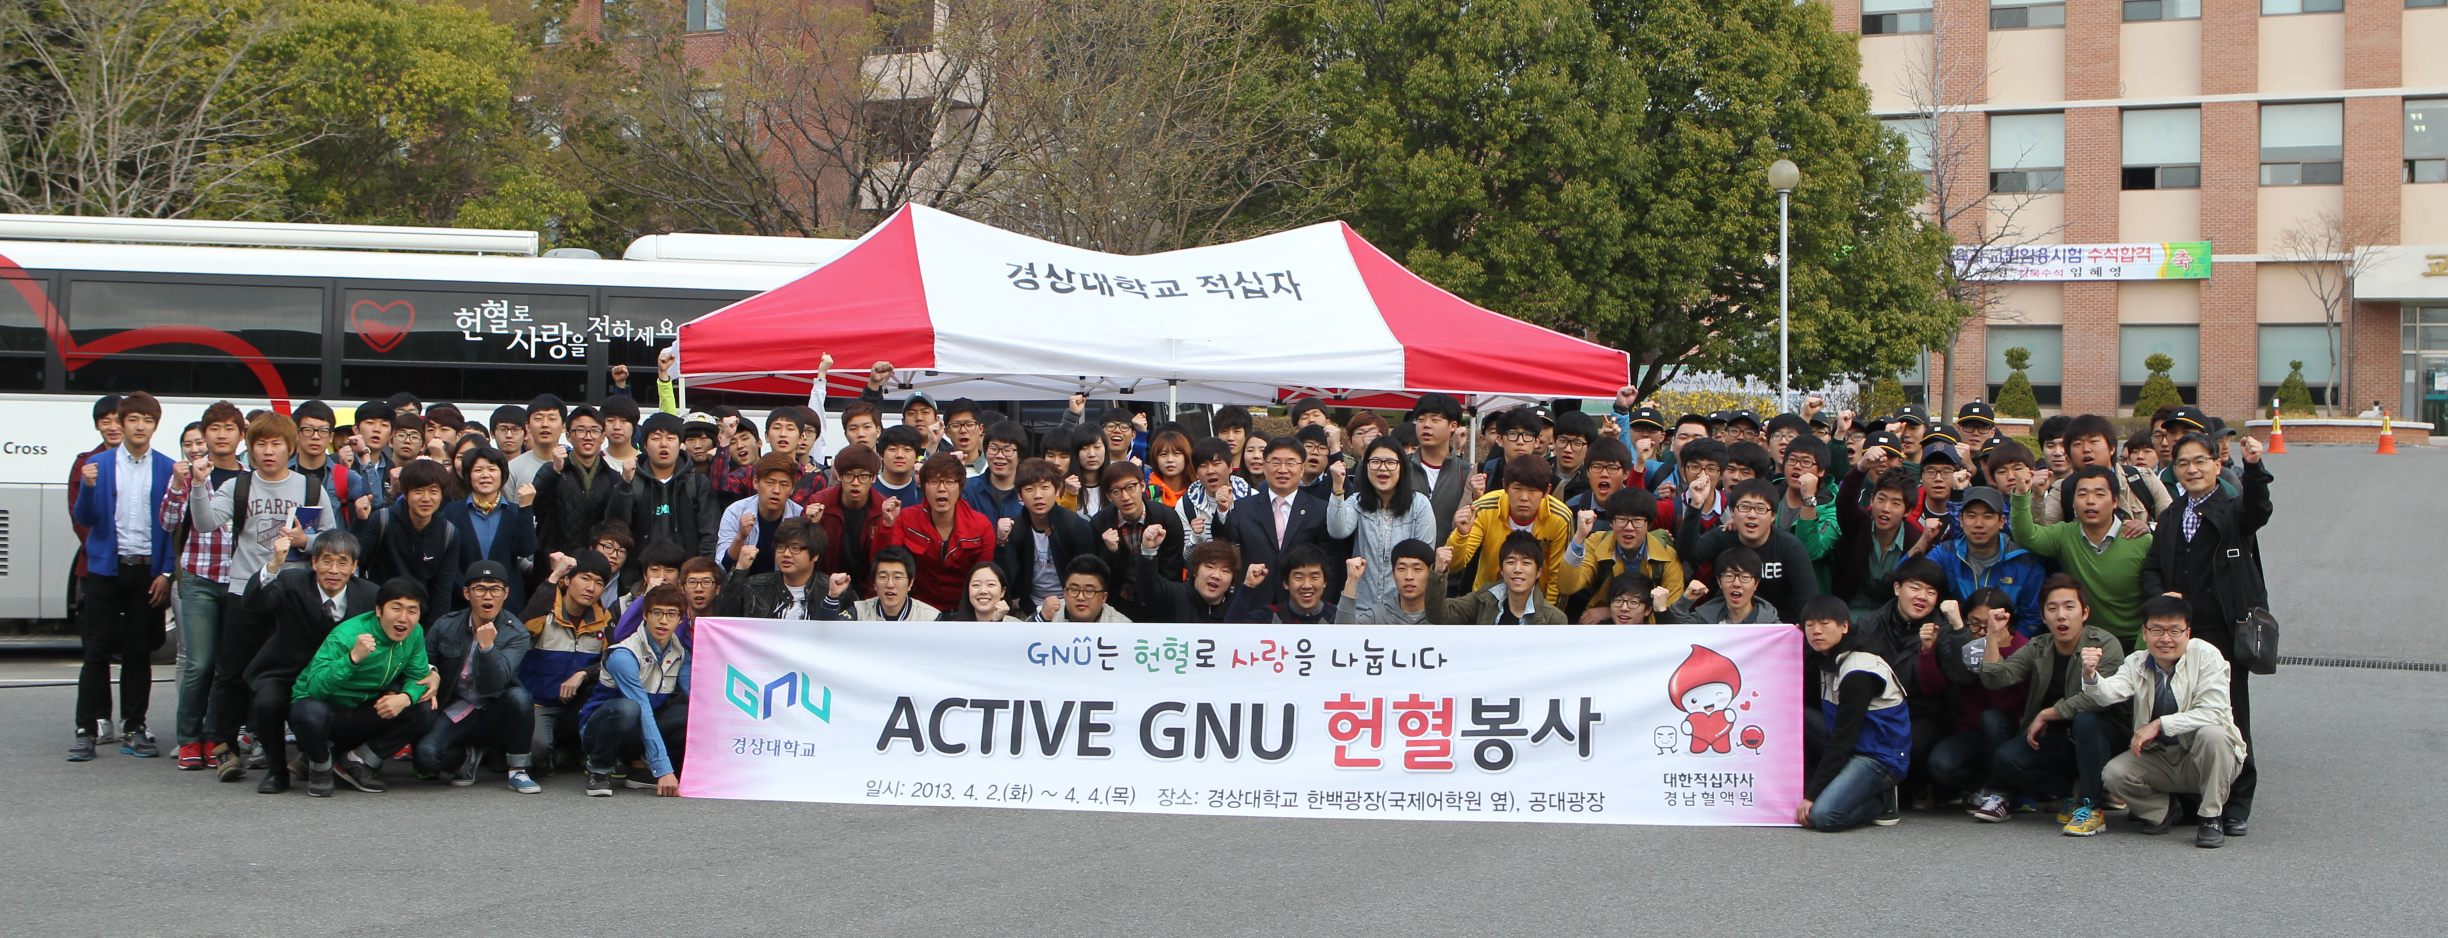 2013 ACTIVE GNU  : ̹